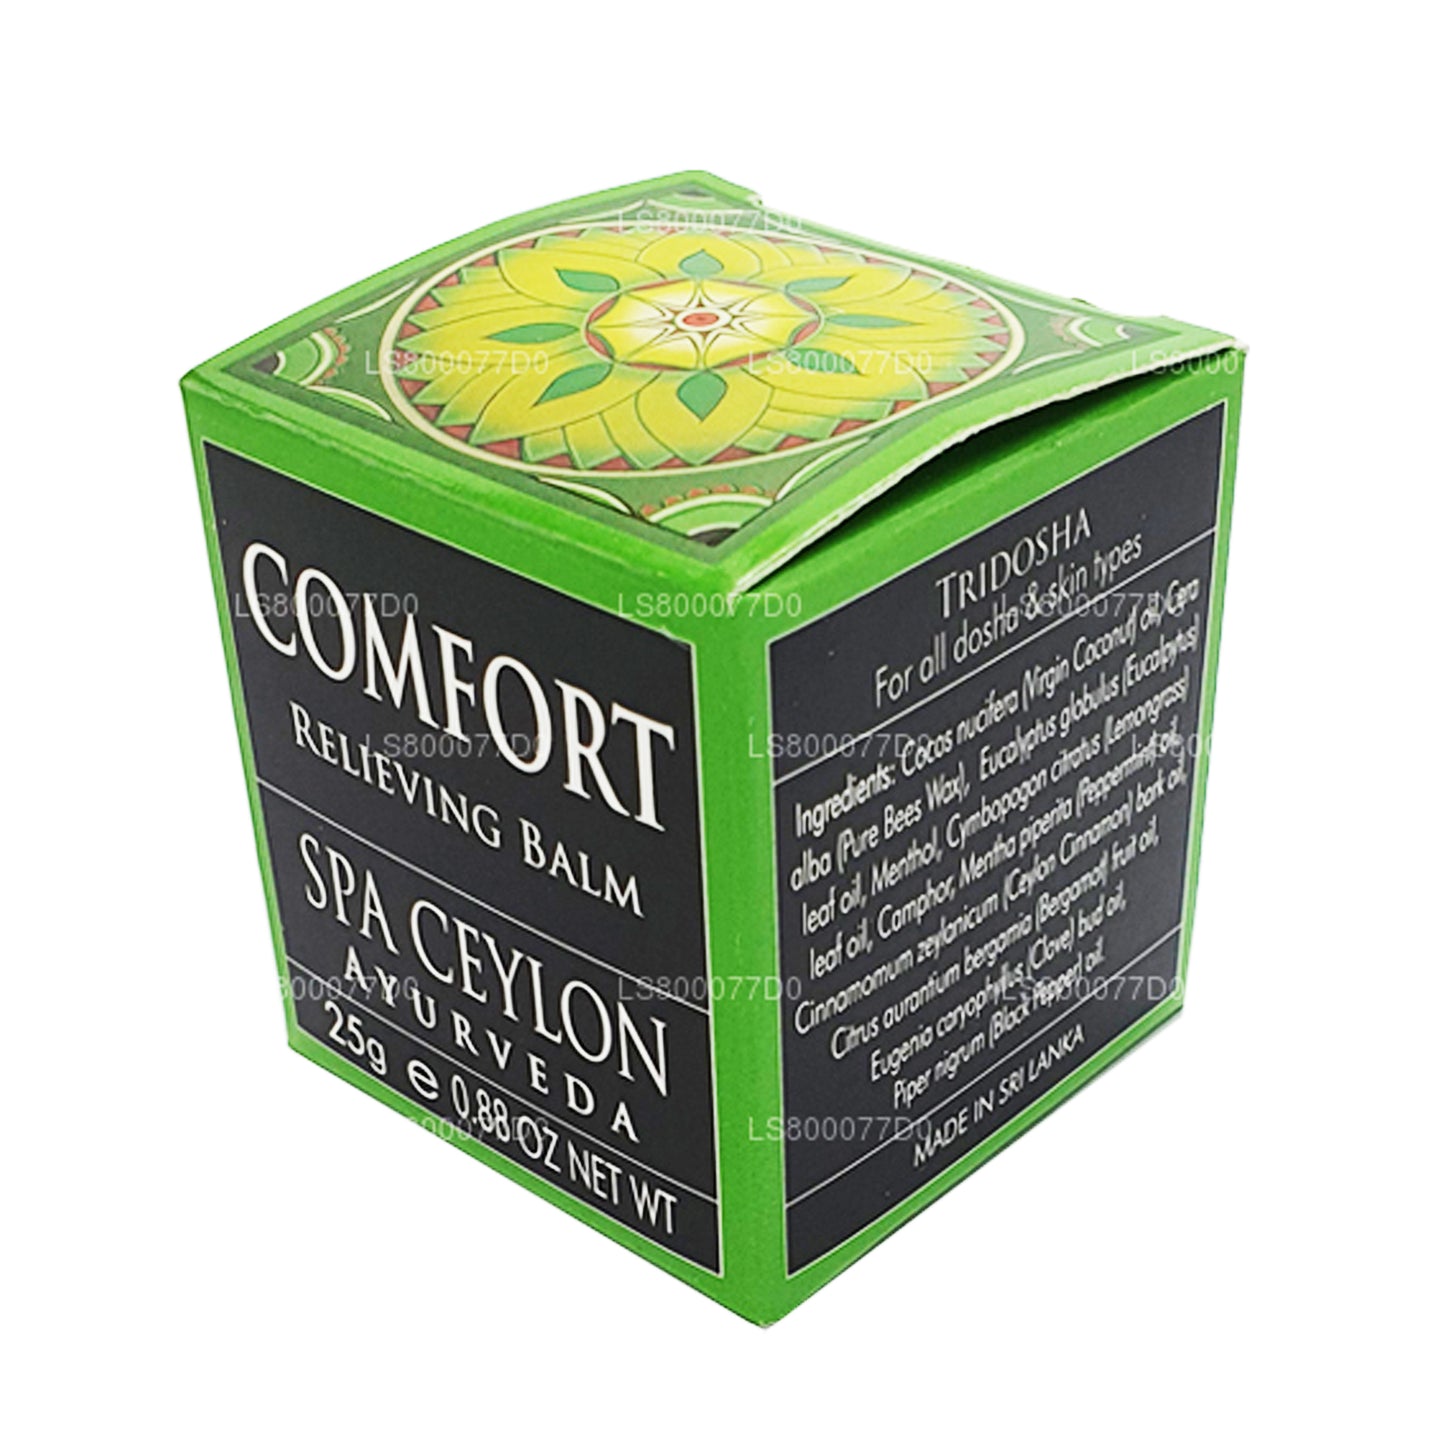 Spa Ceylon Comfort leevendav palsam (25g)